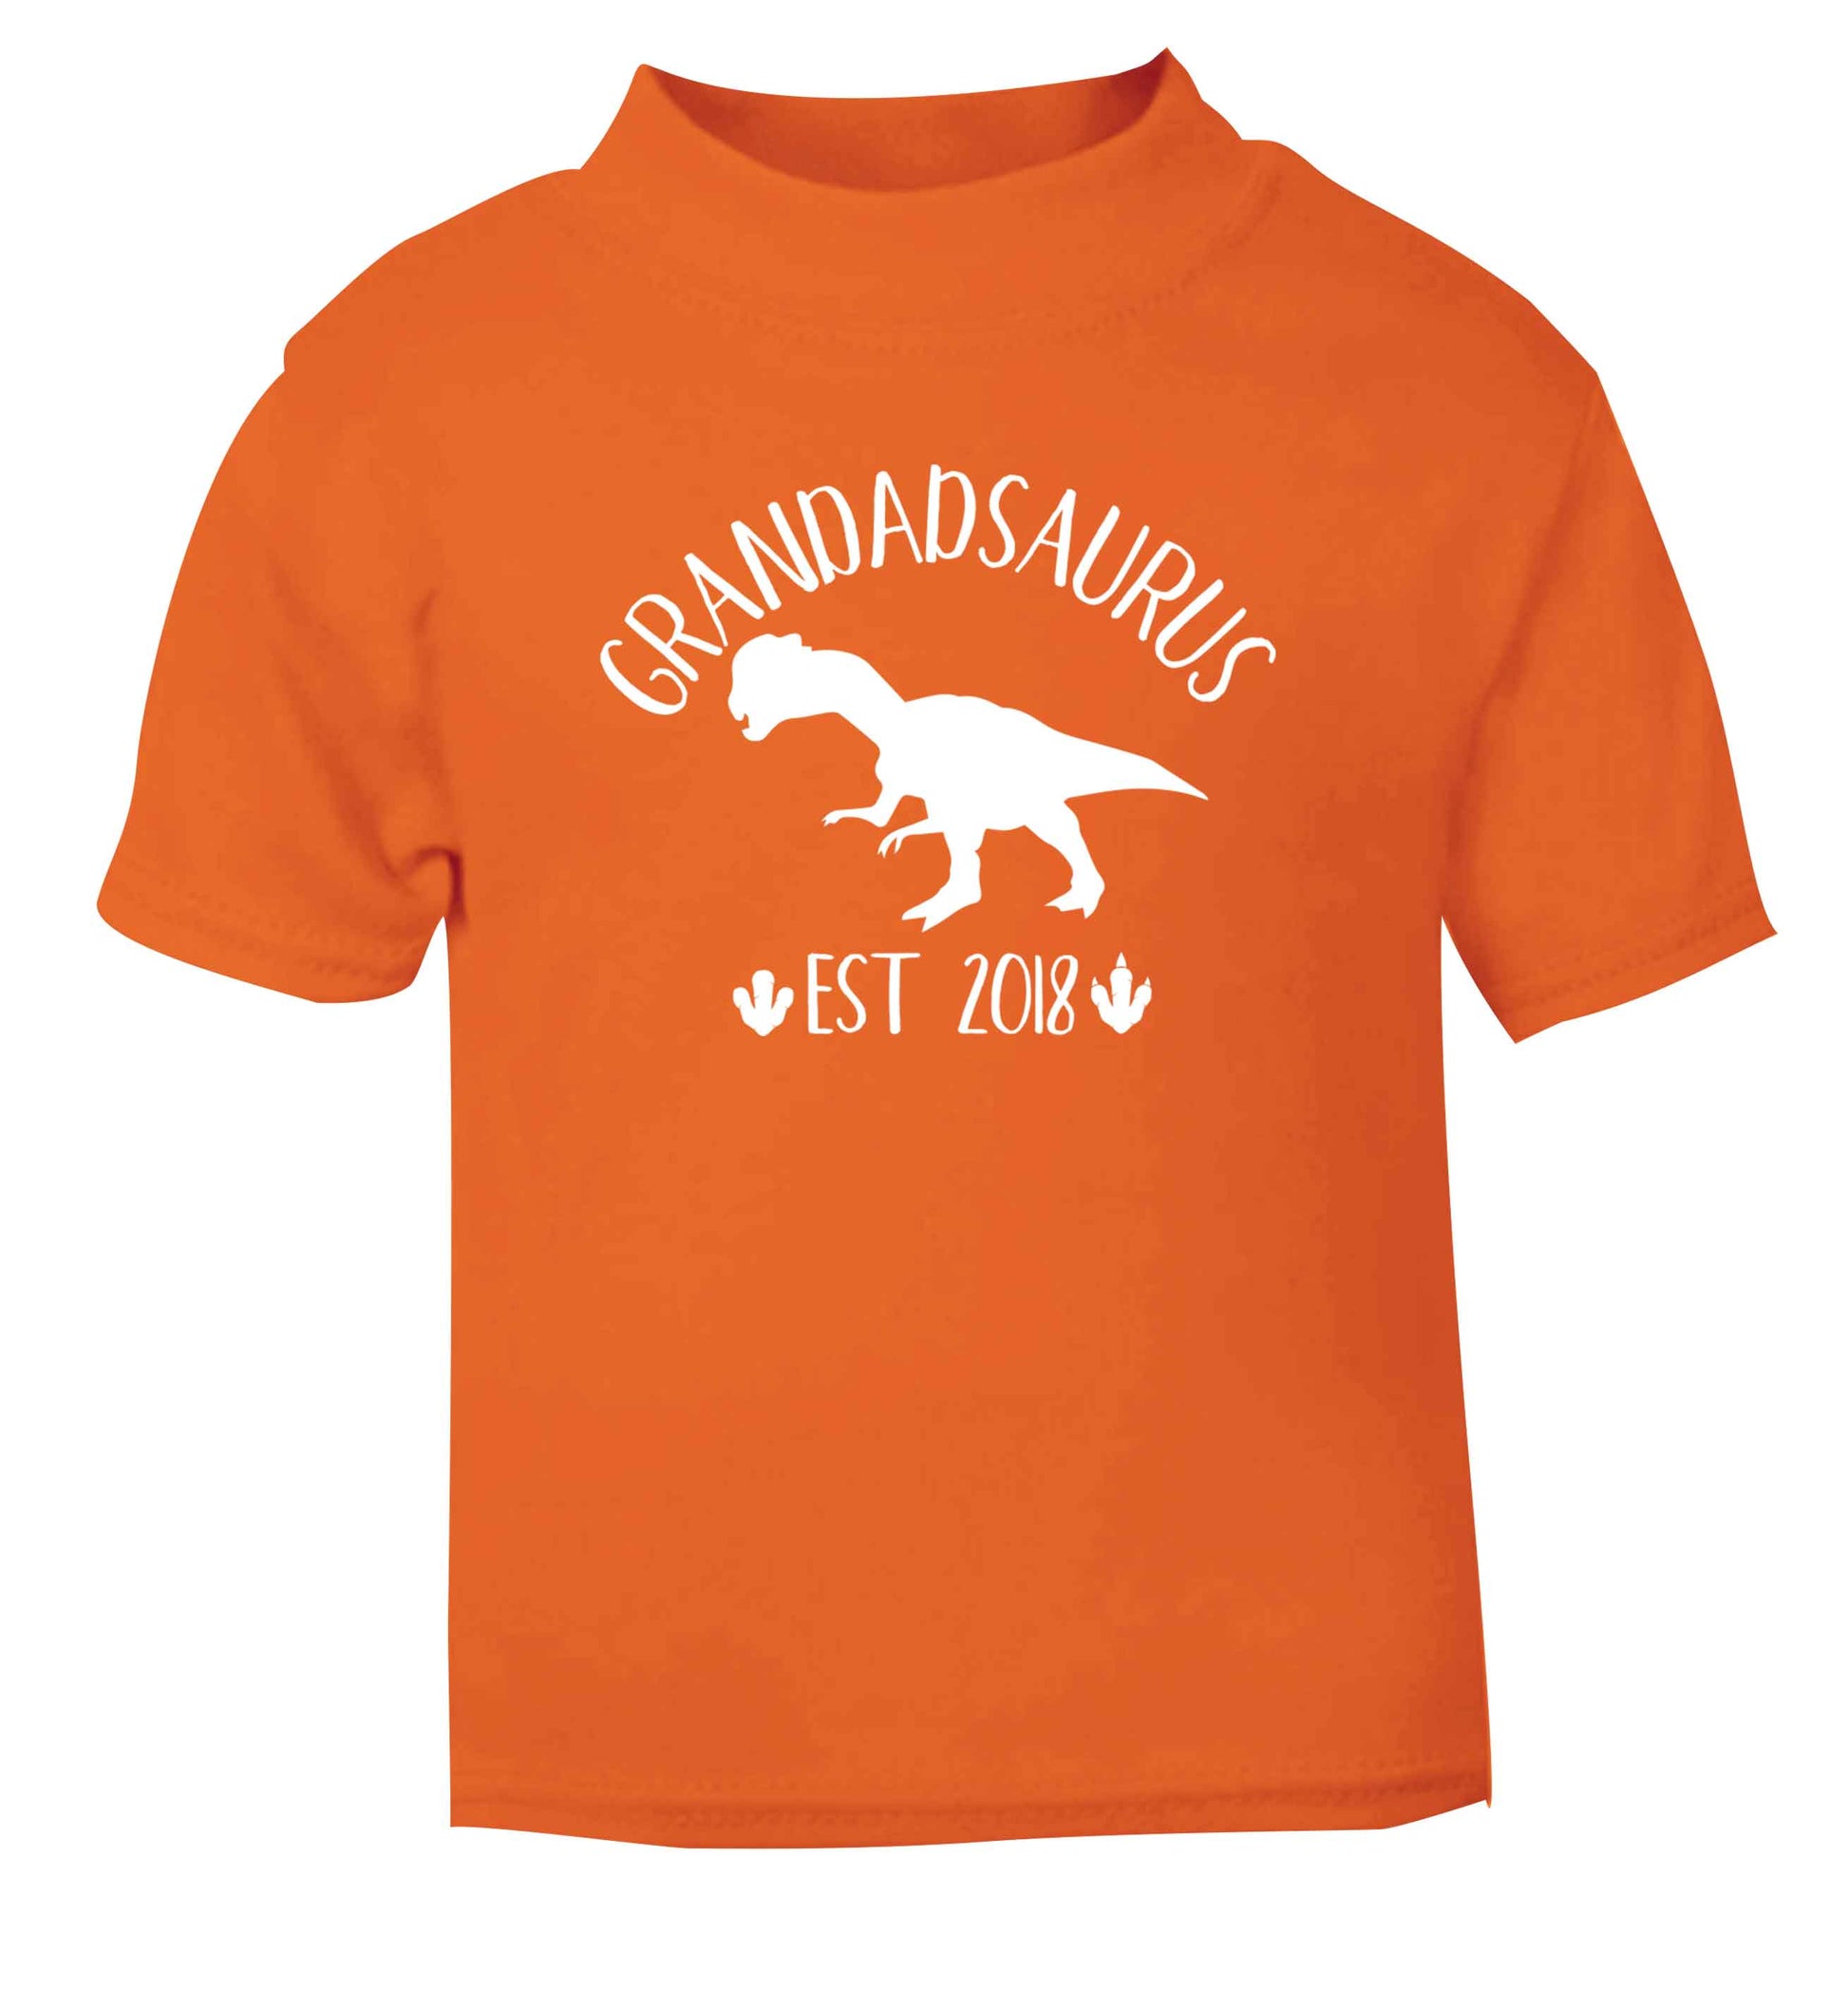 Personalised grandadsaurus since (custom date) orange Baby Toddler Tshirt 2 Years